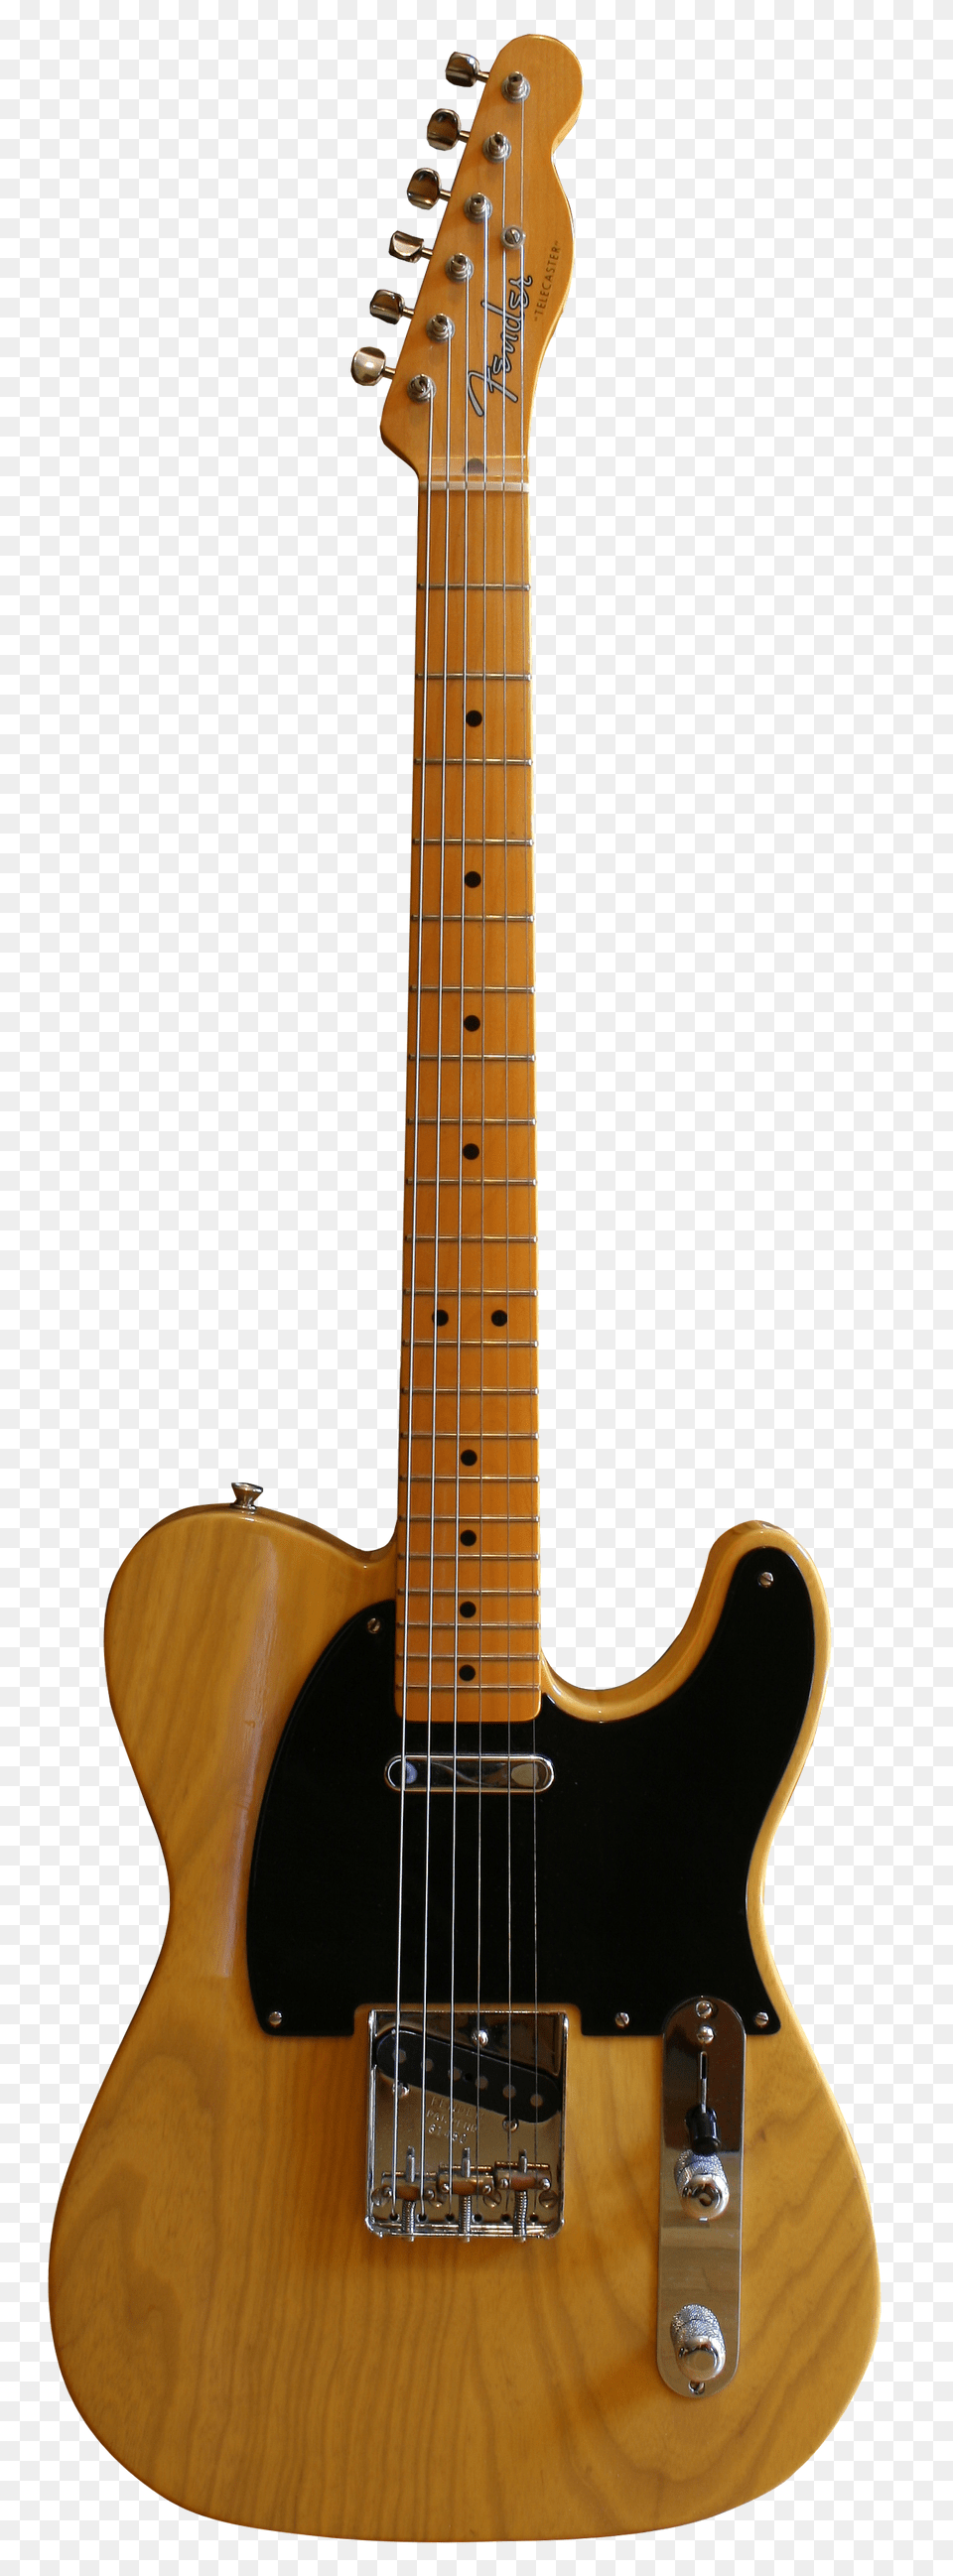 Fender Transparent Fender, Bass Guitar, Guitar, Musical Instrument, Electric Guitar Png